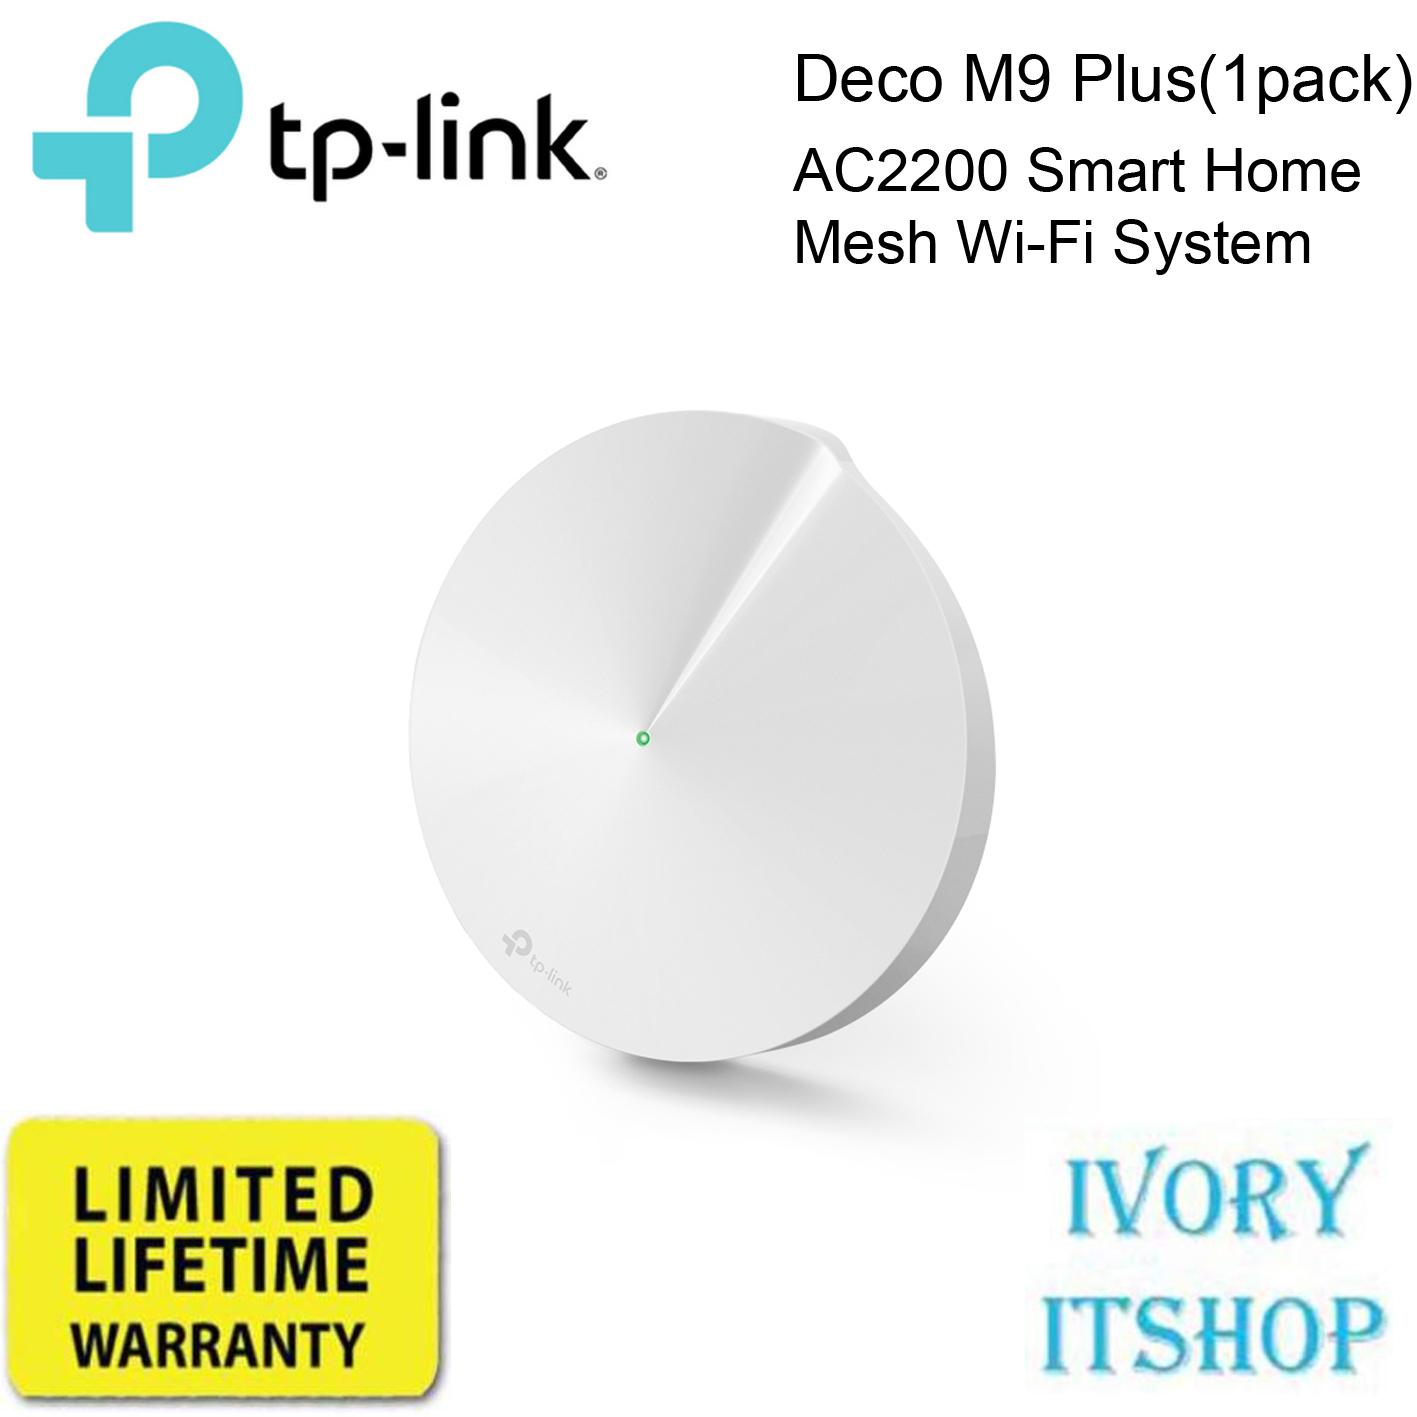 TP-LINK Deco M9 Plus AC2200 Smart Home Mesh Wi-Fi System Pack 1/ivoryitshop